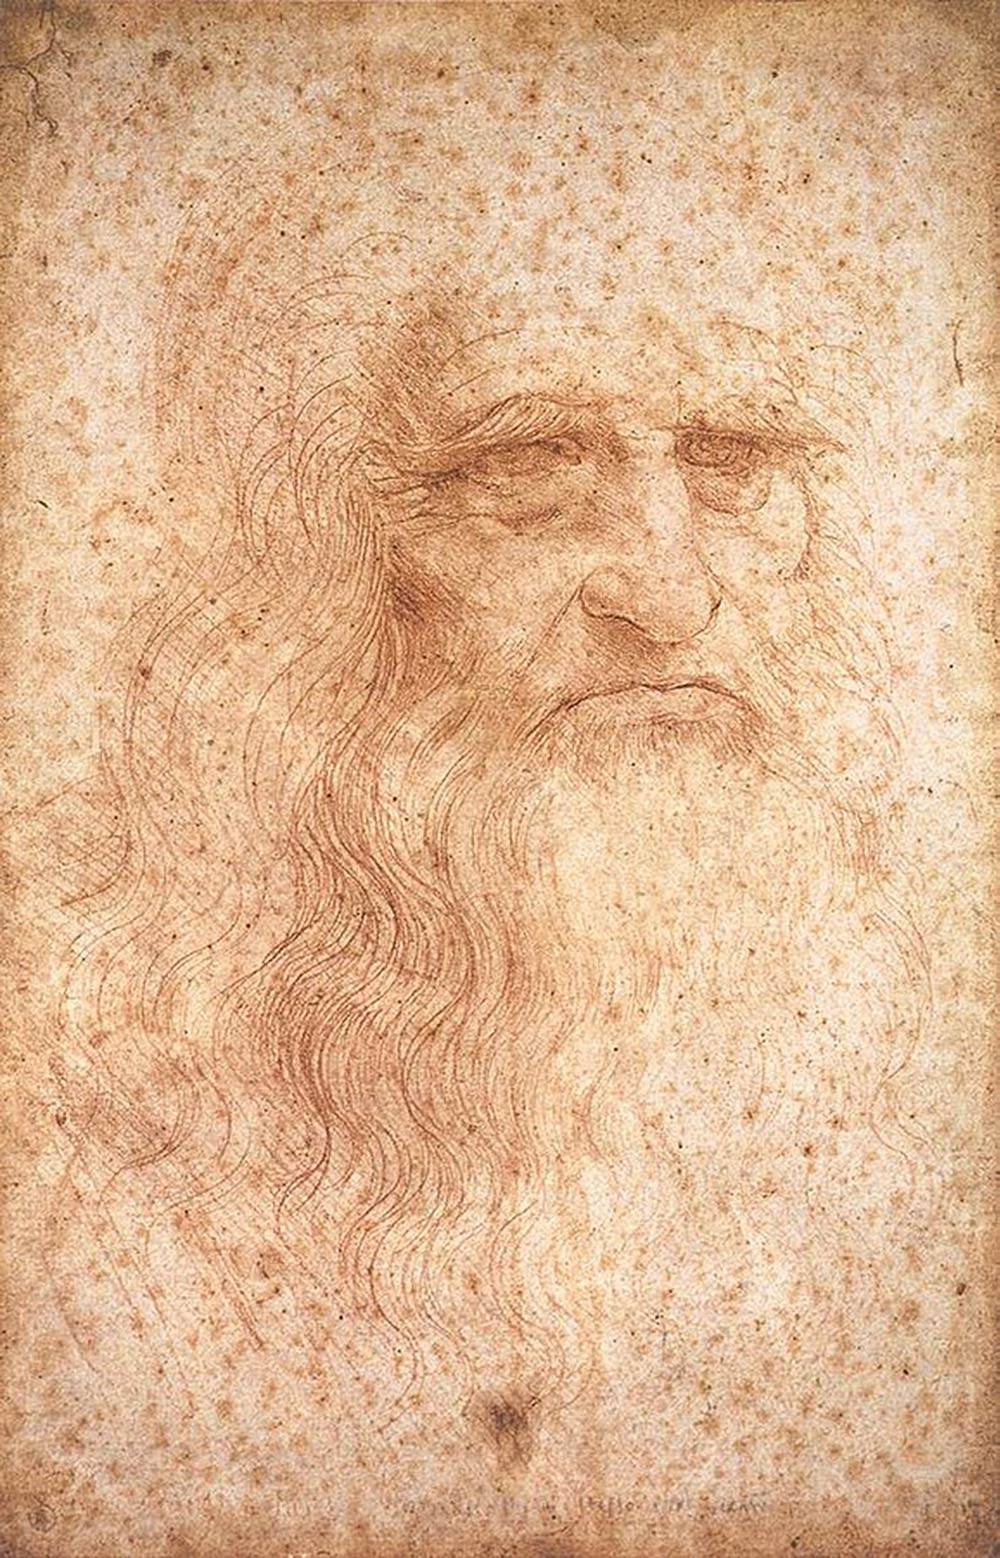 Leonardo da Vinci, Autoportret, rysunek, ok. 1513, Biblioteca Reale, Turyn (Fot. Wikipedia)